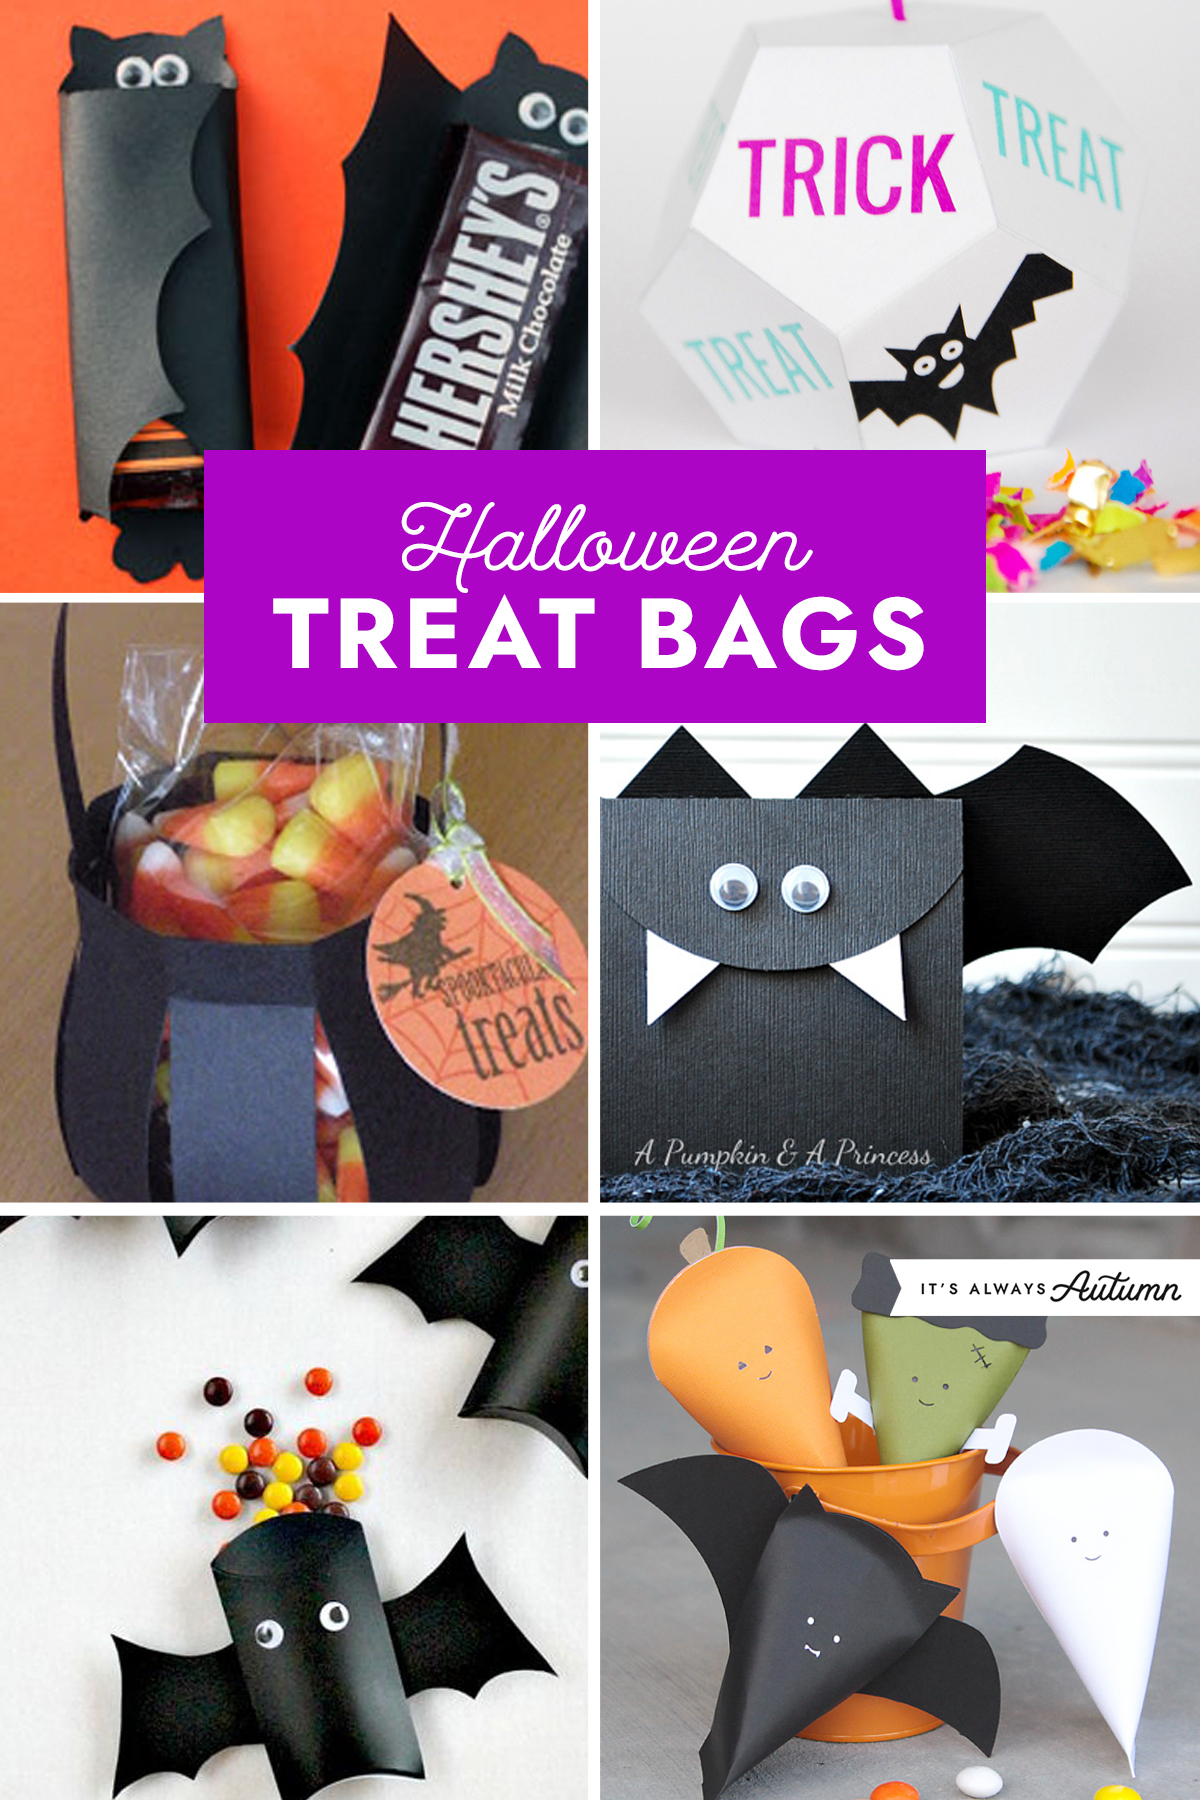 20+ Homemade Halloween Treat Bags